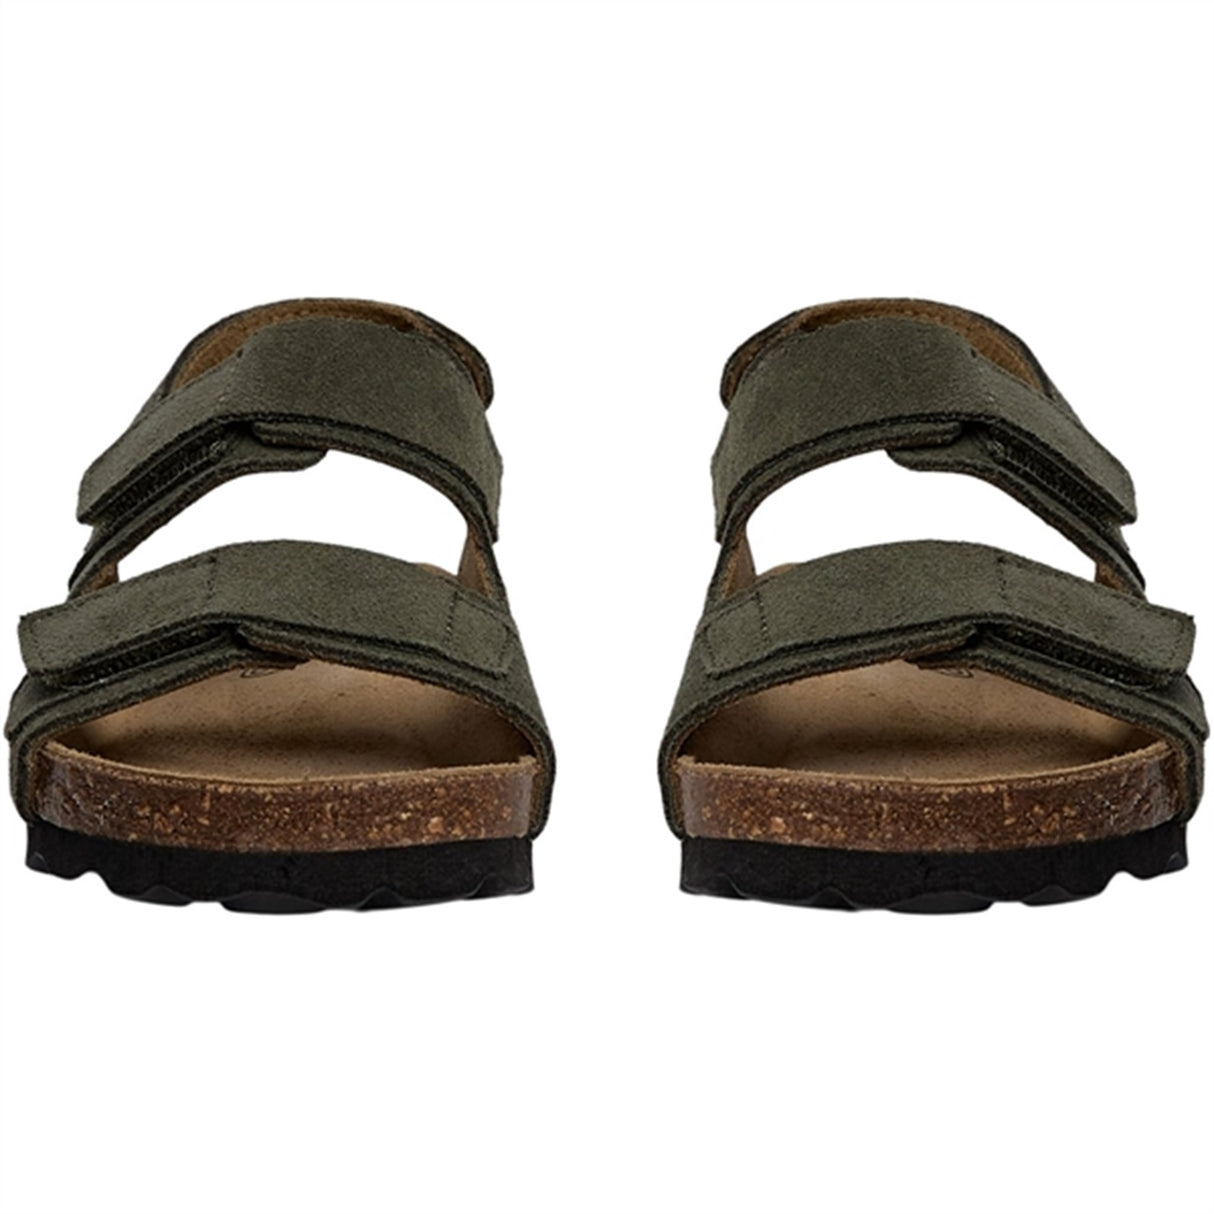 Sofie Schnoor Army Green Sandals 3